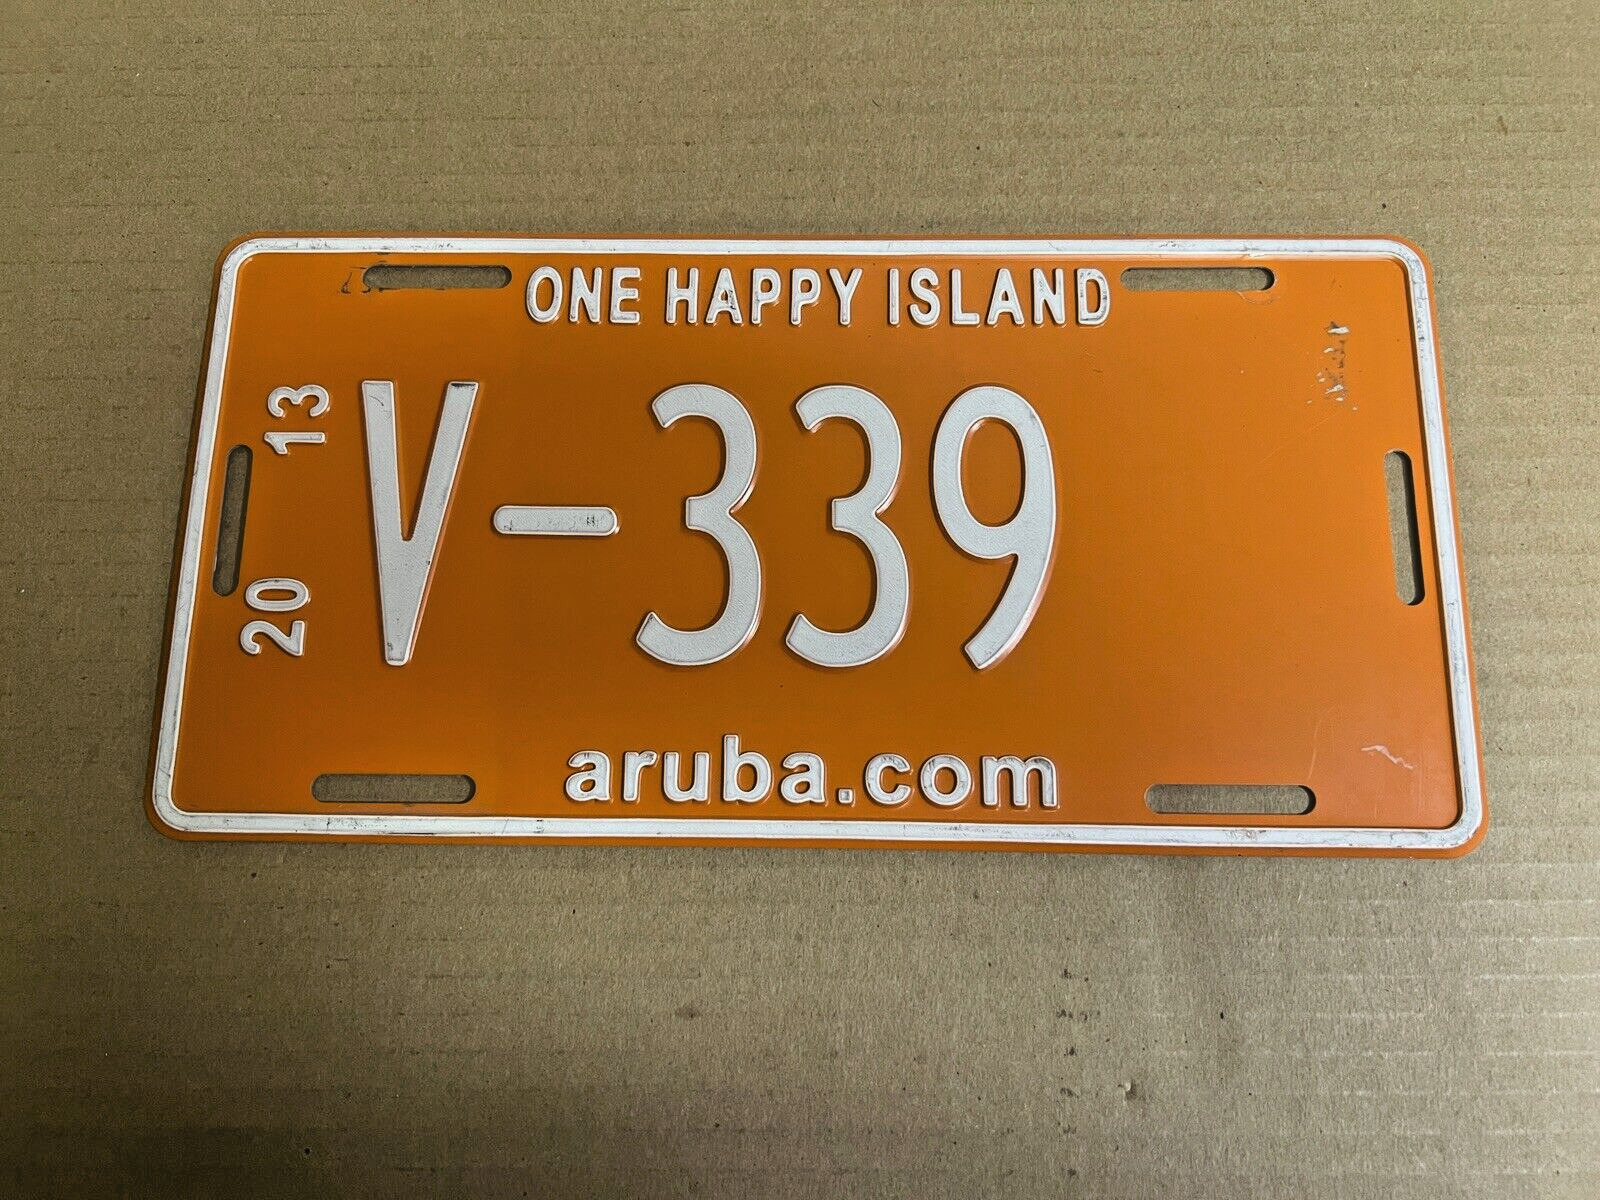 License Plate Aruba 2013 One Happy Island, V - 339 EXPIRED